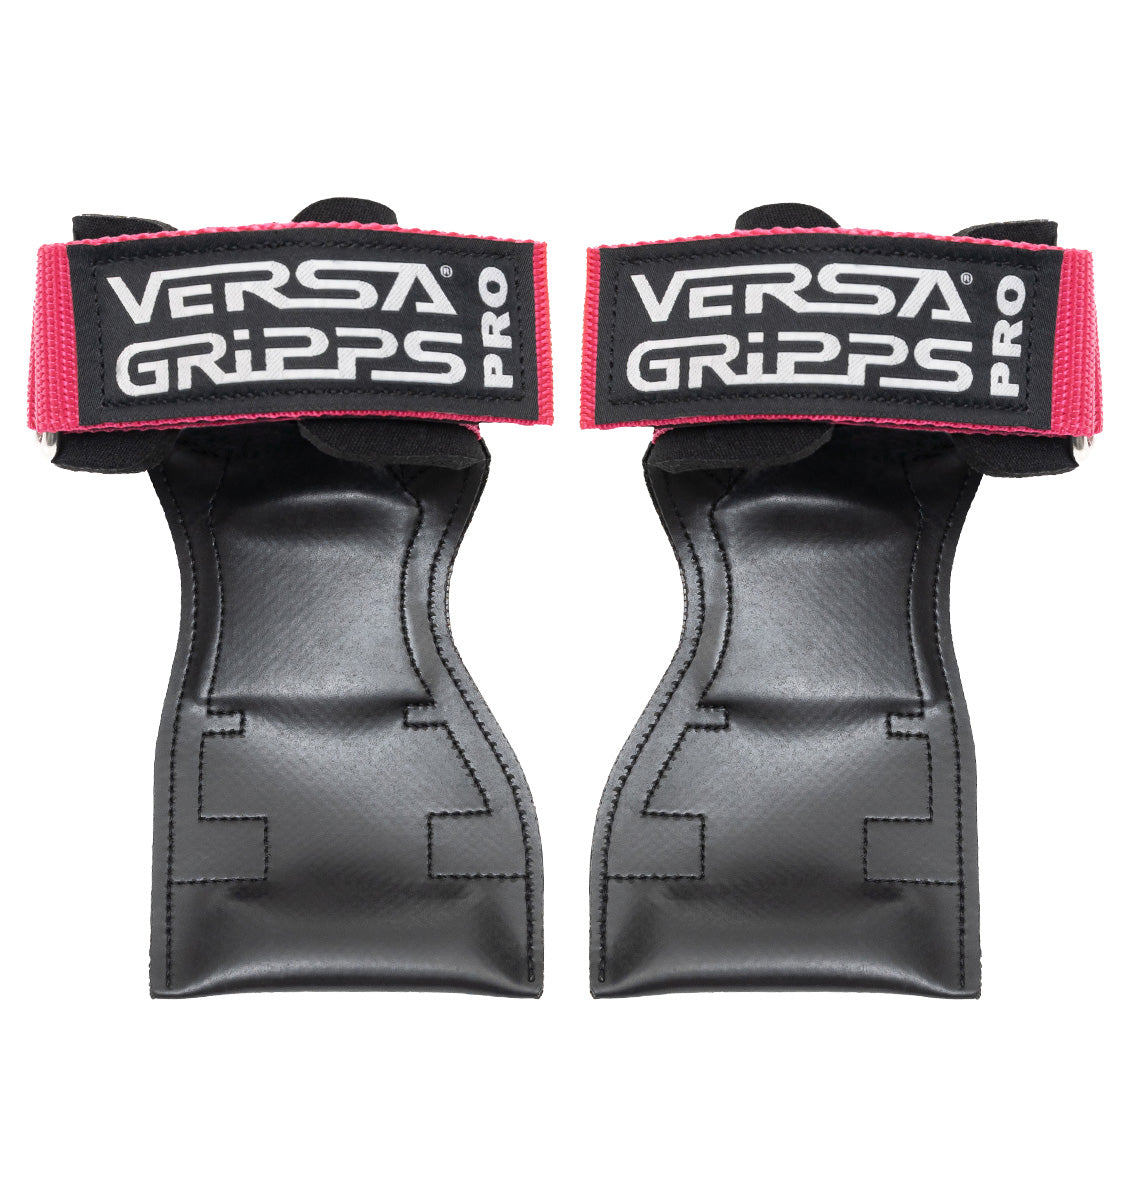 Versa Gripps® PRO Series Lifting Straps - Pink - 8